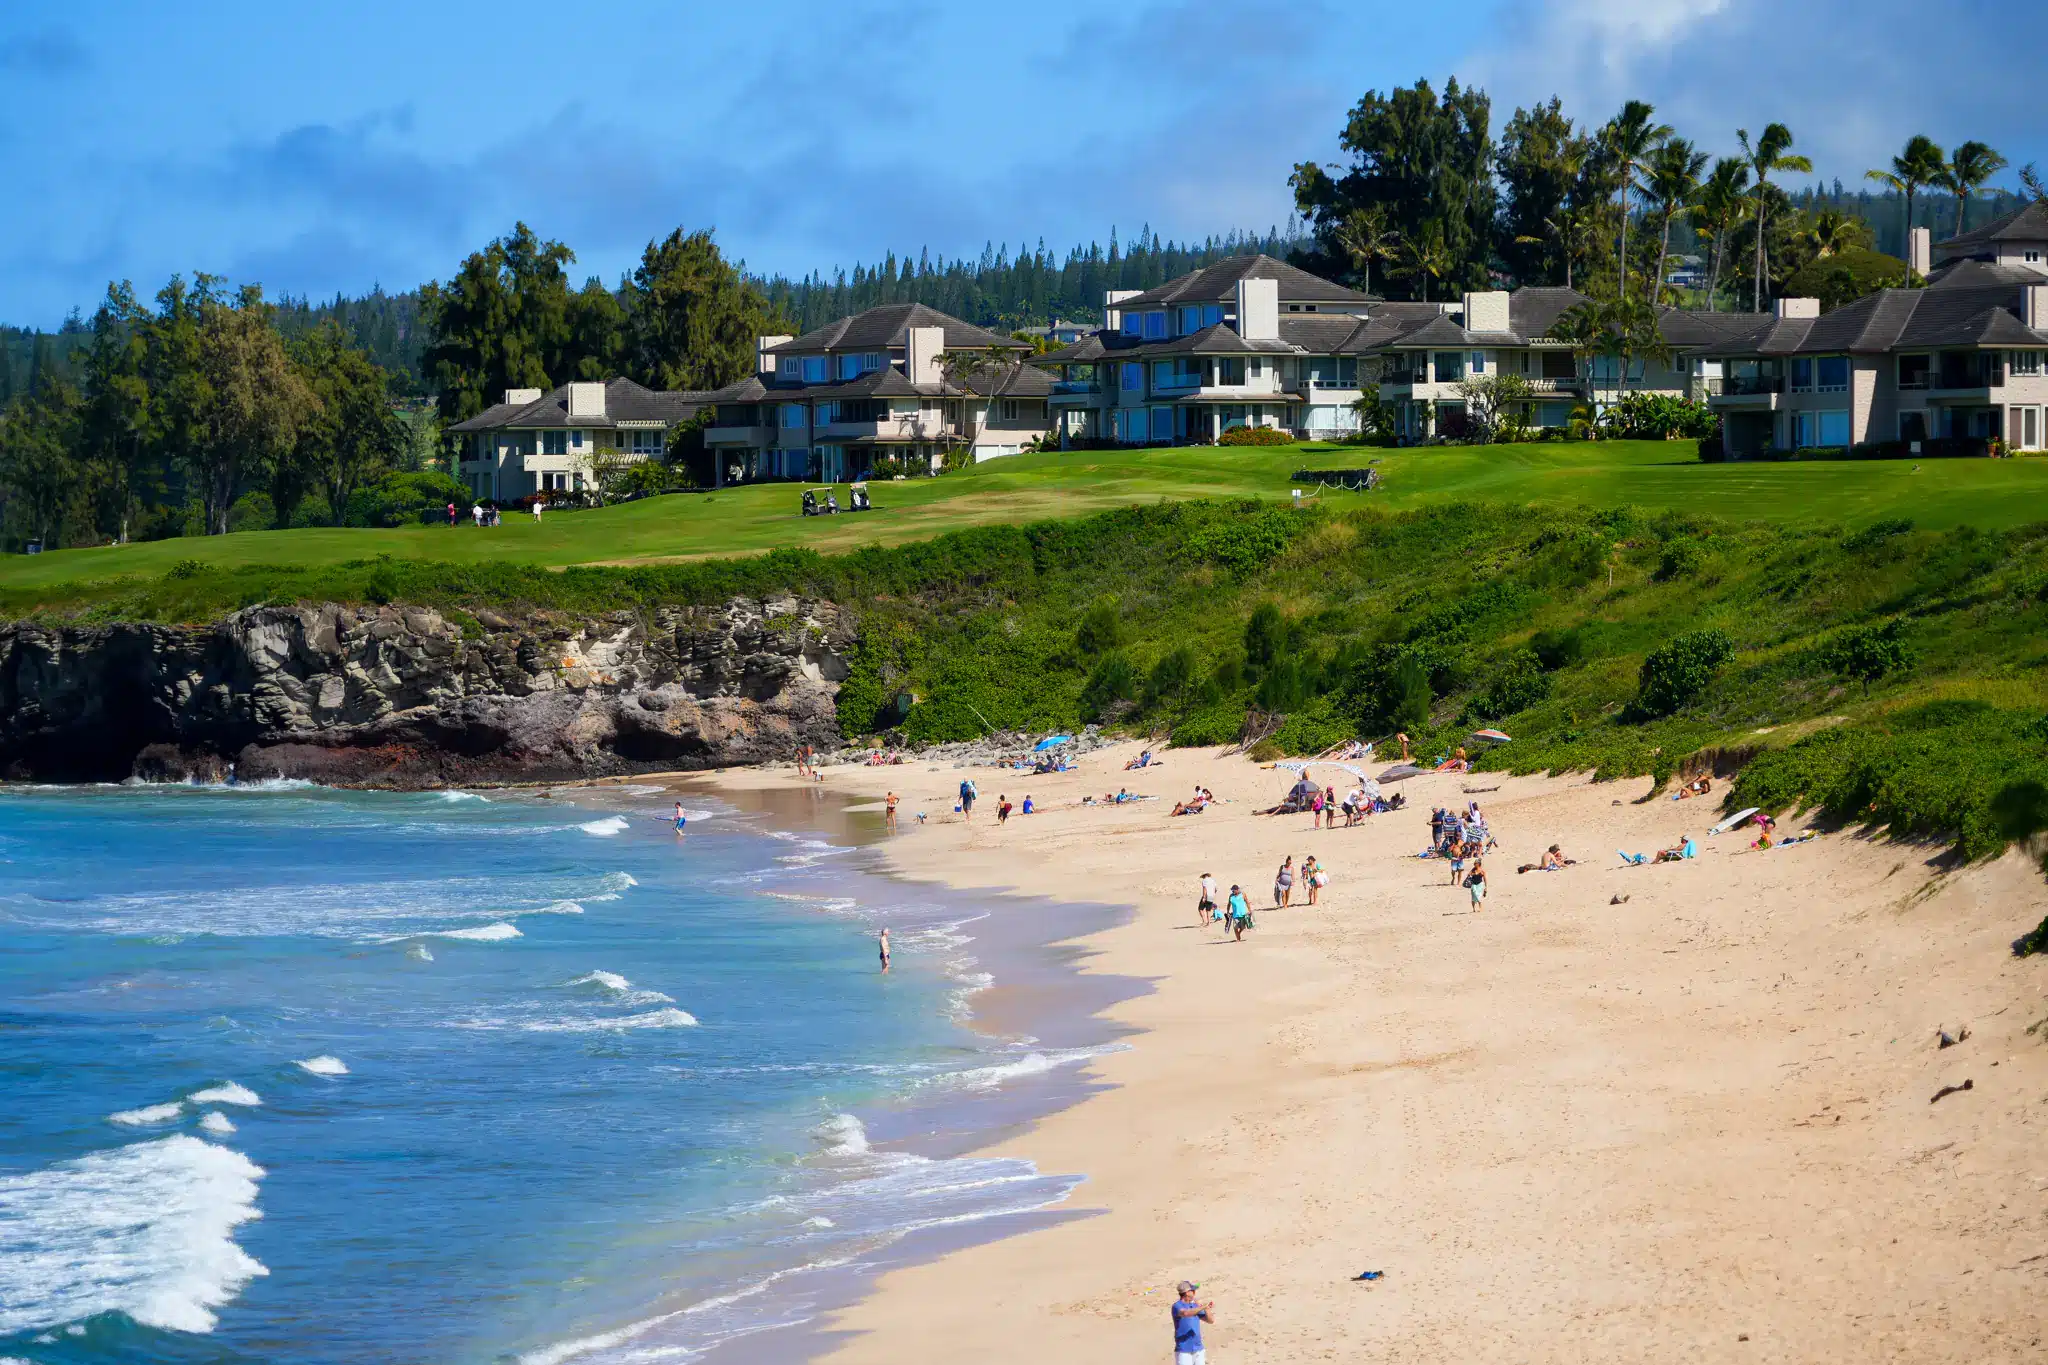 Oneloa Beach is a Beach located in the city of Wailea on Maui, Hawaii